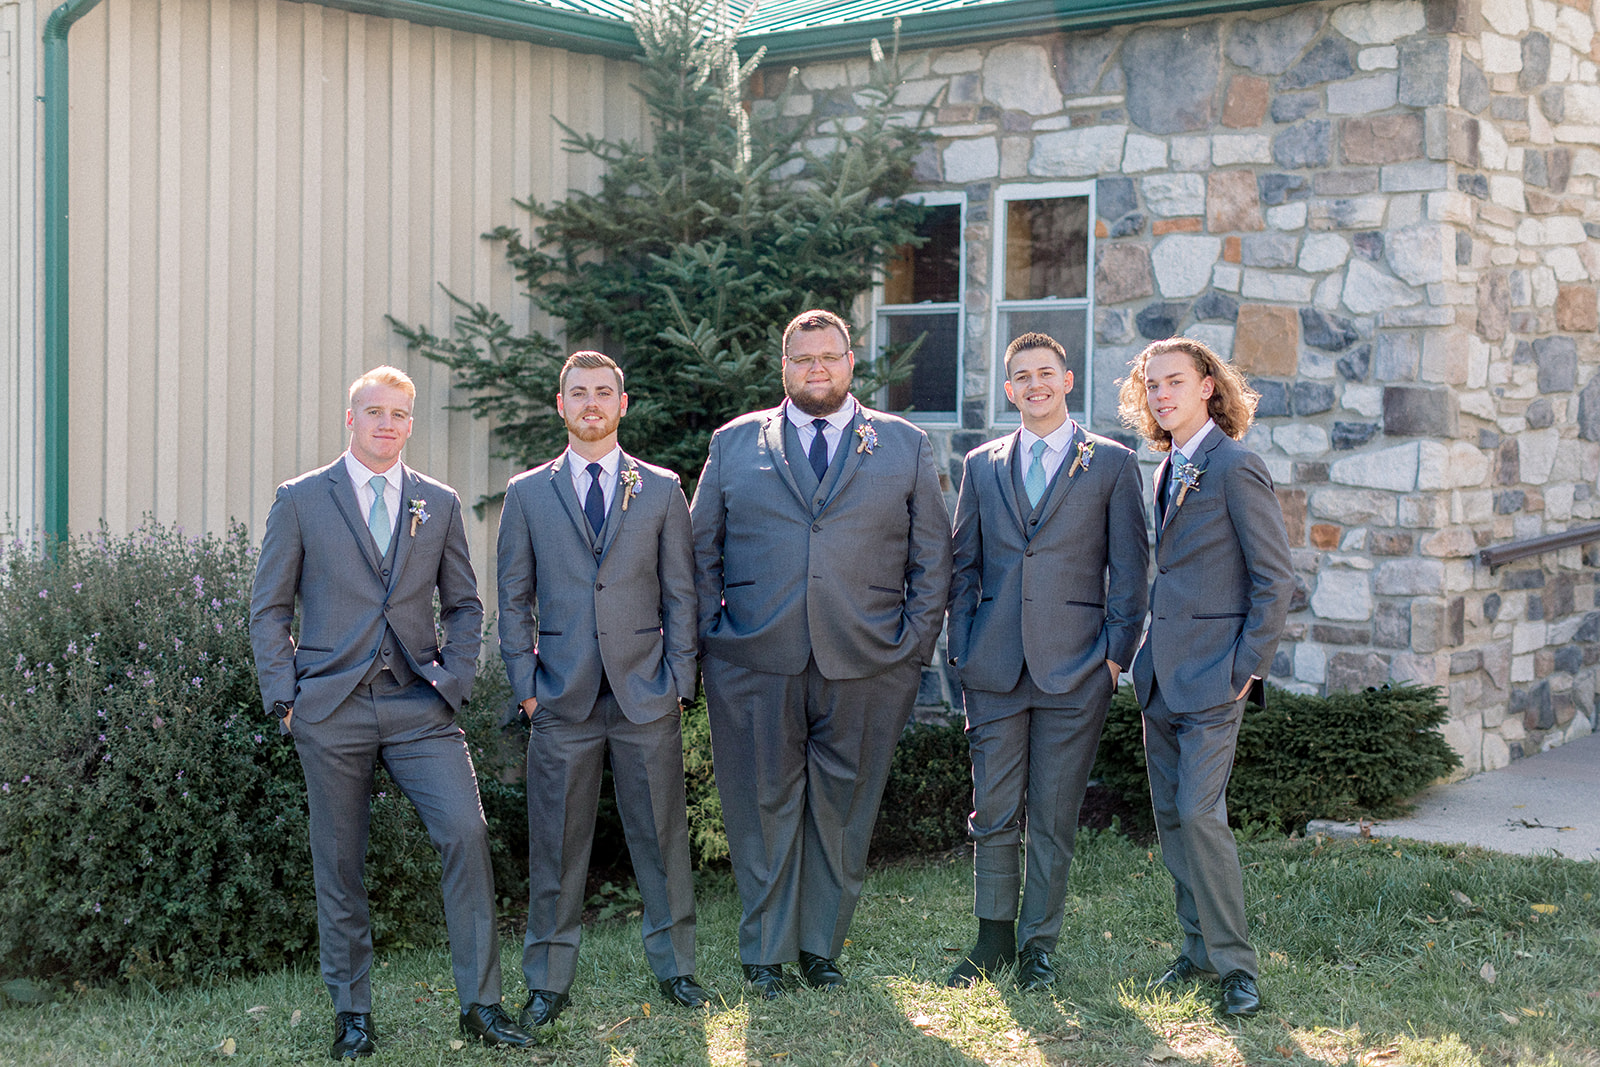 Pennsylvania wedding photographer captures groom standing with groomsmen wearing gray suits before wedding at Lodges of Gettysburg